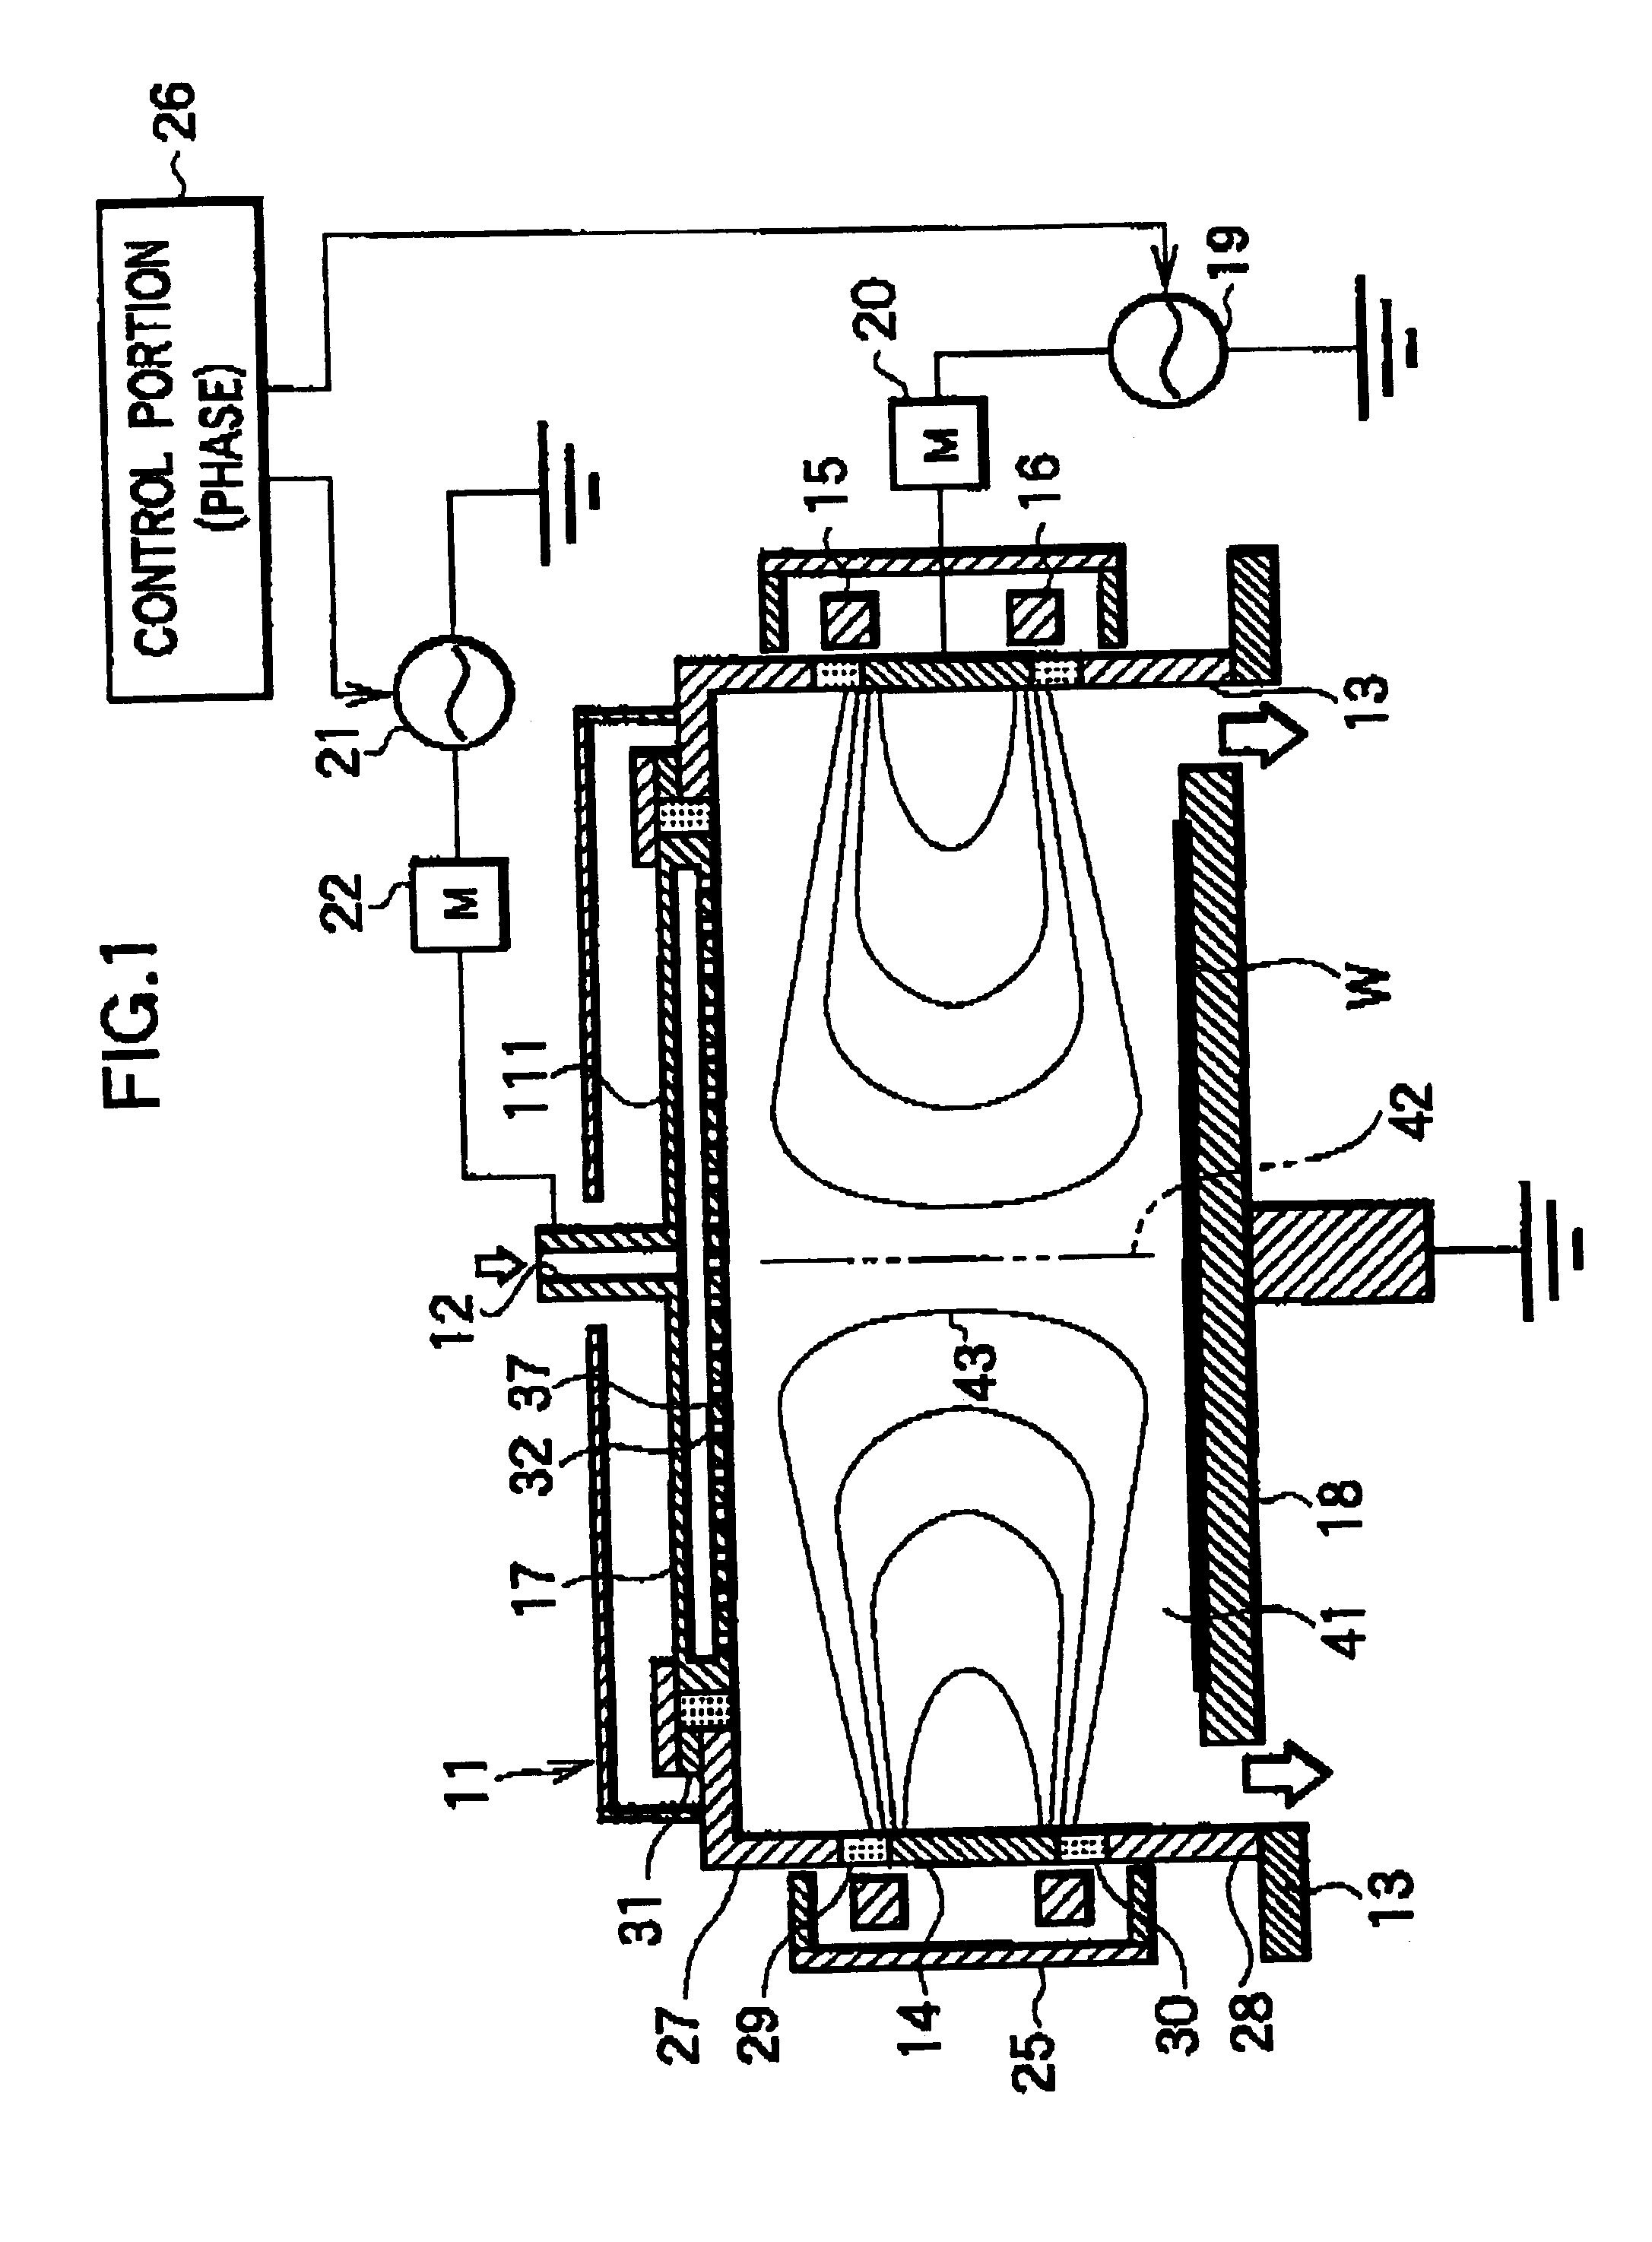 Plasma generating apparatus and semiconductor manufacturing method